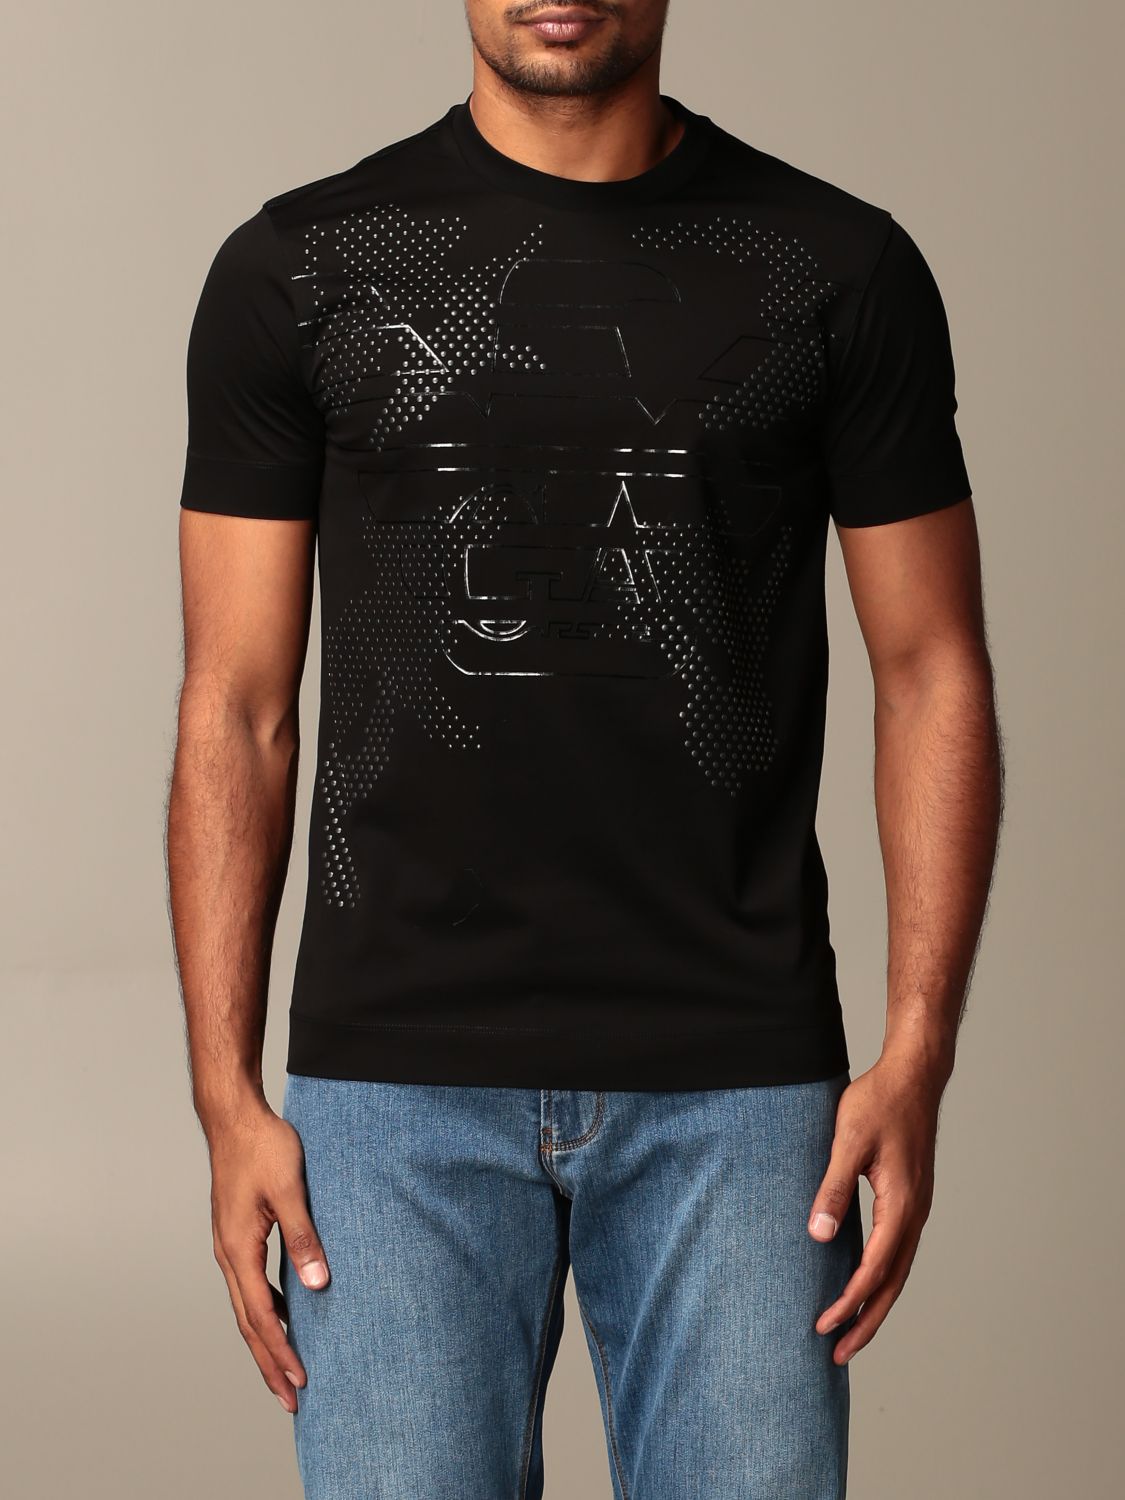 Giorgio Armani Logo T Shirt Online Sale 